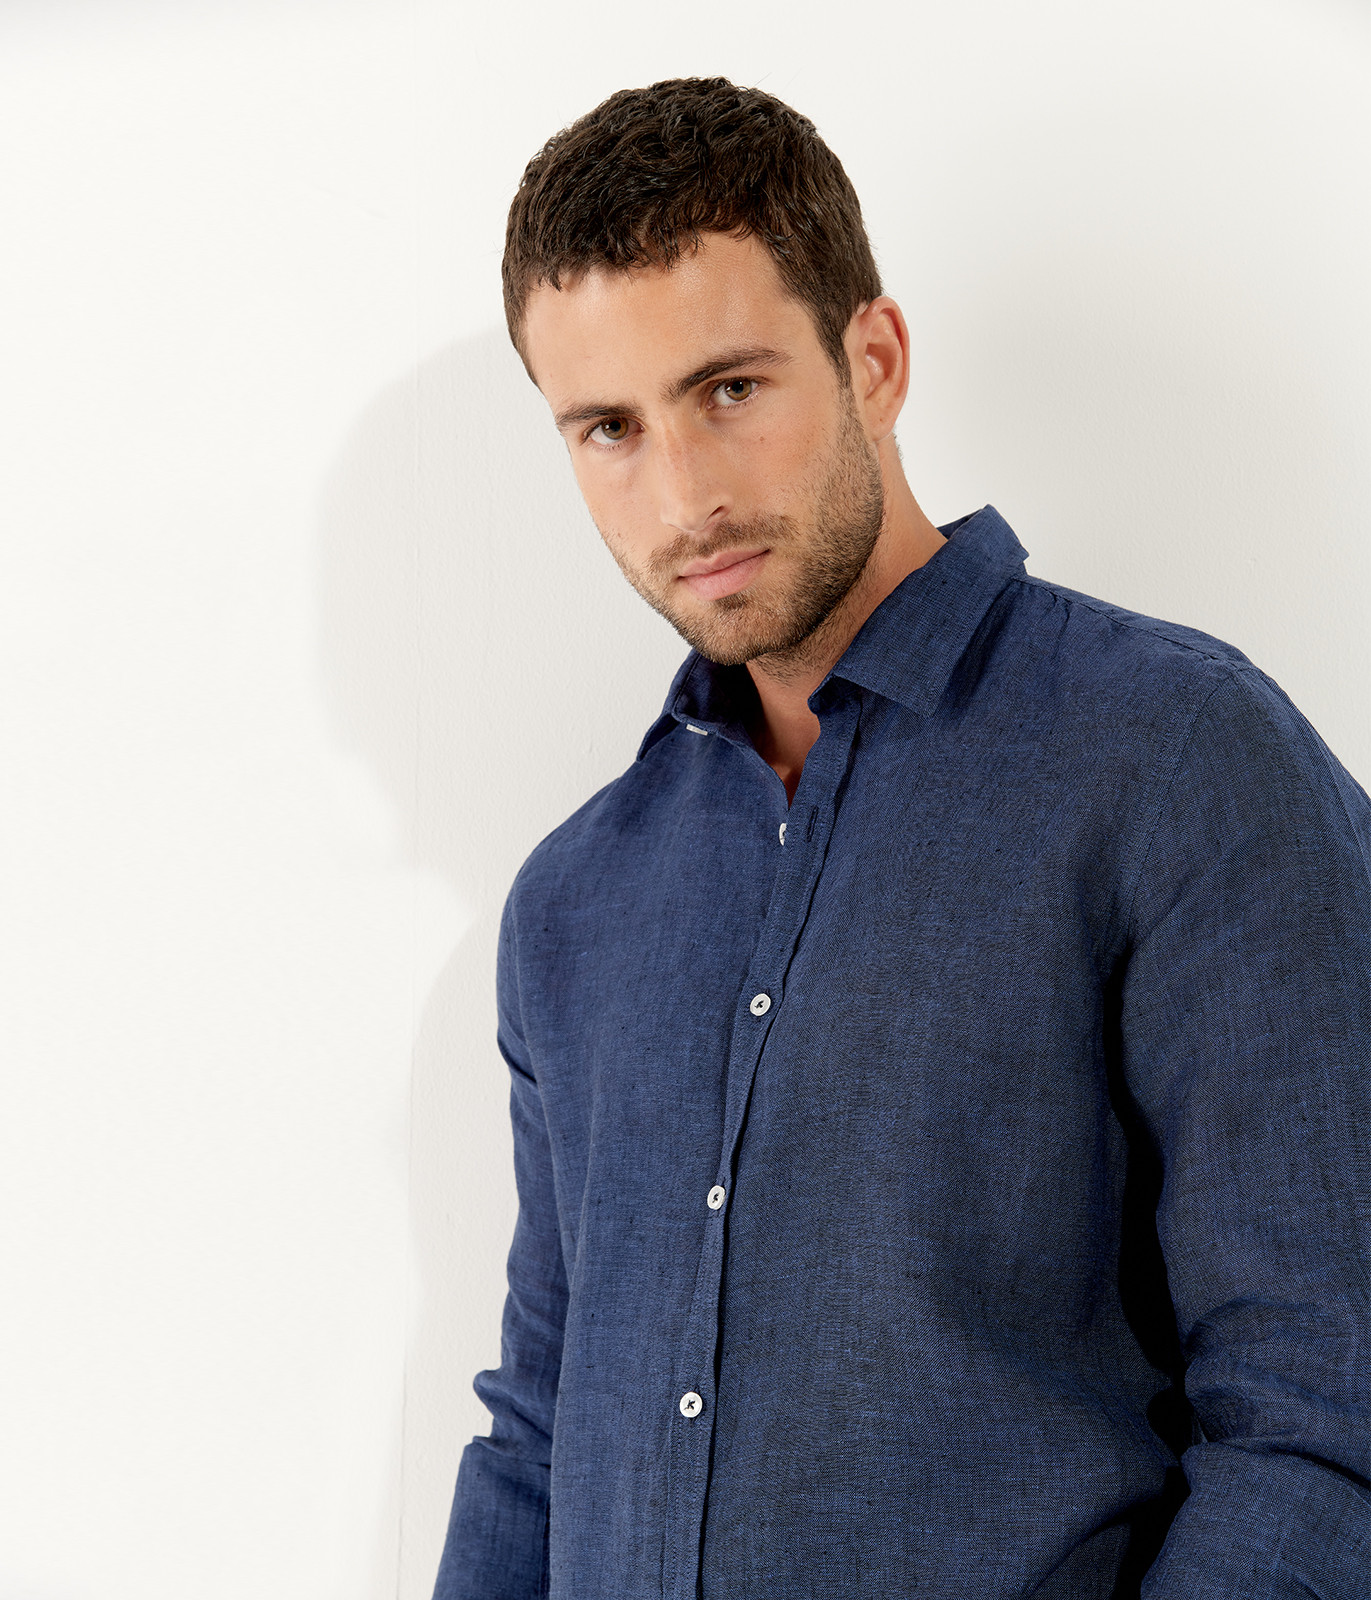 Plain navy blue color long sleeves shirt for men